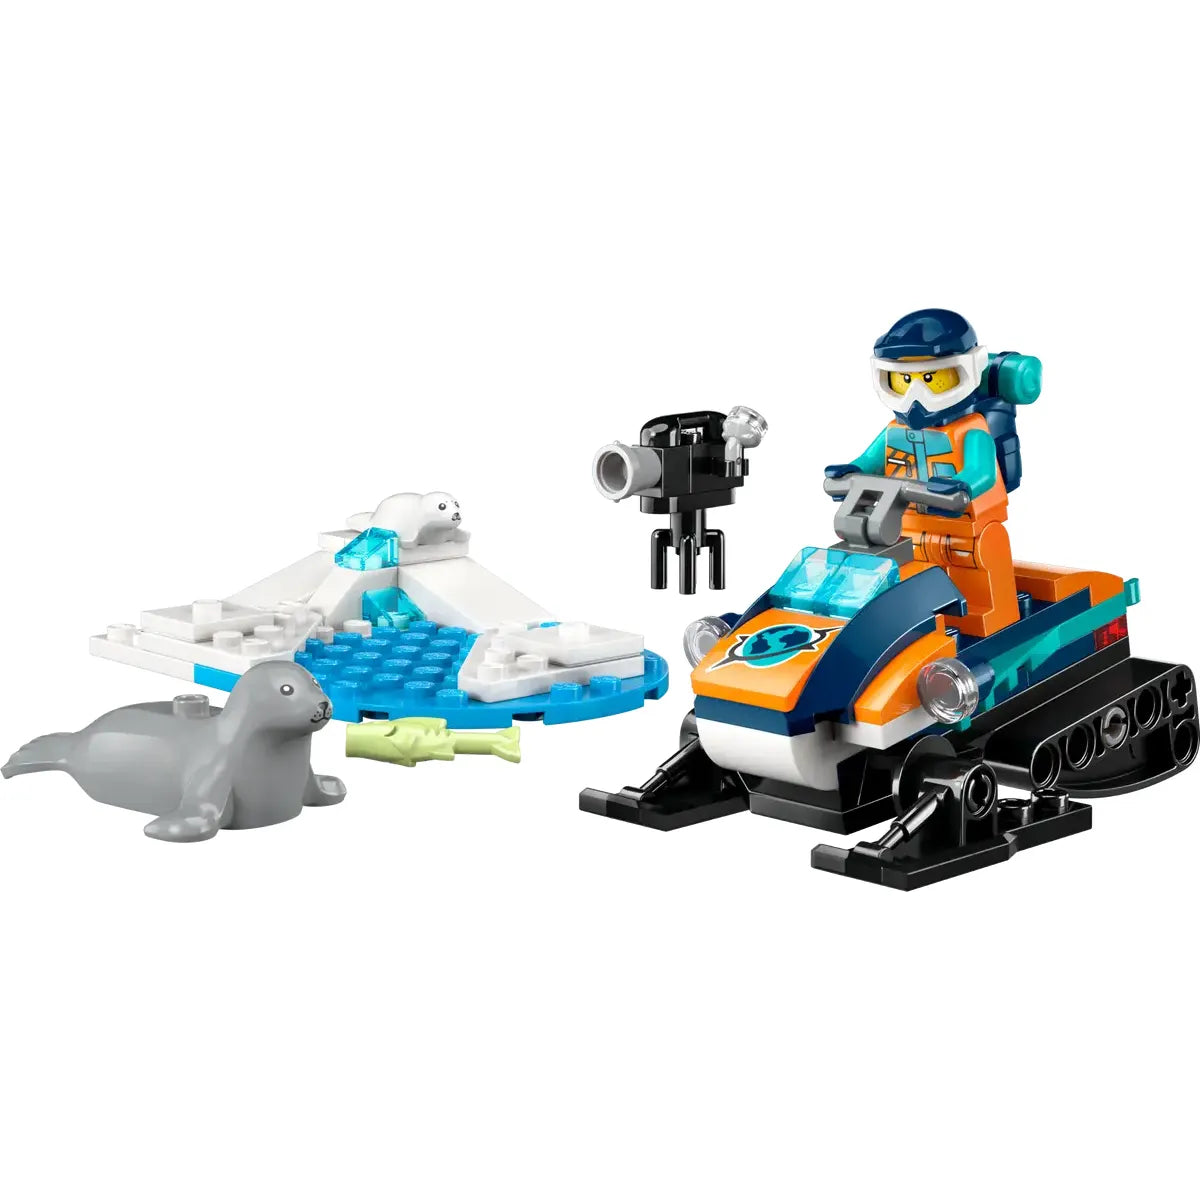 Lego City Arctic Explorer Snowmobile